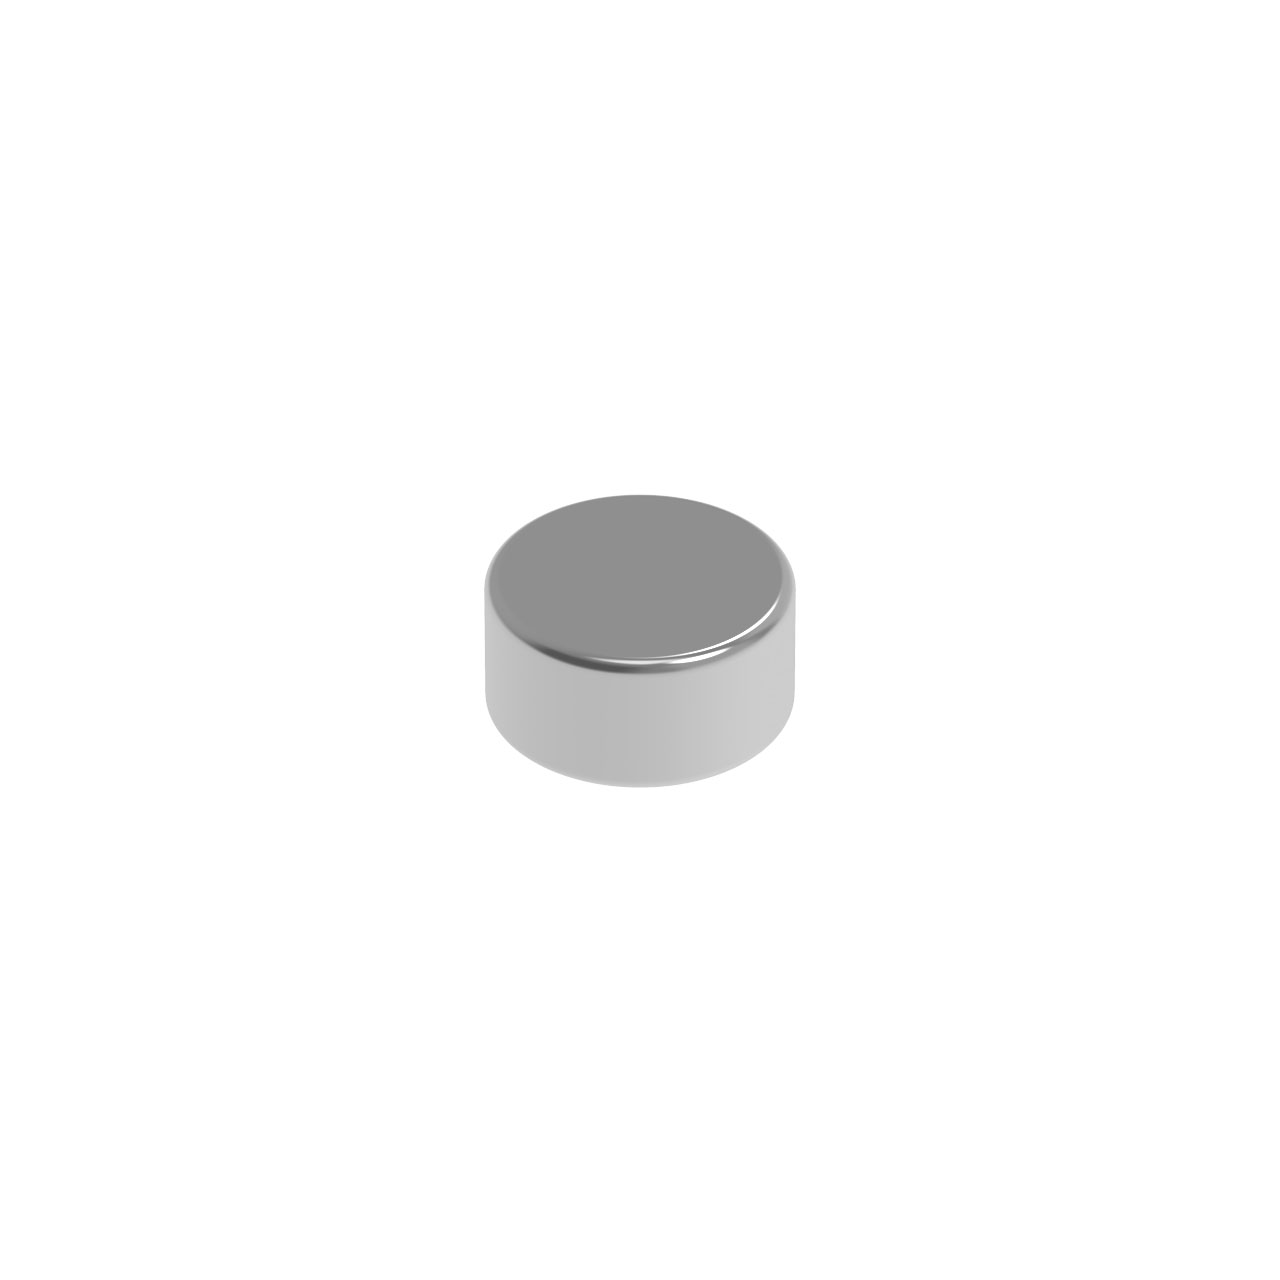 HiQ Parts: Neodymium Magnet N52 Round Shape Diameter 2mm x Height 1mm (10pcs) 